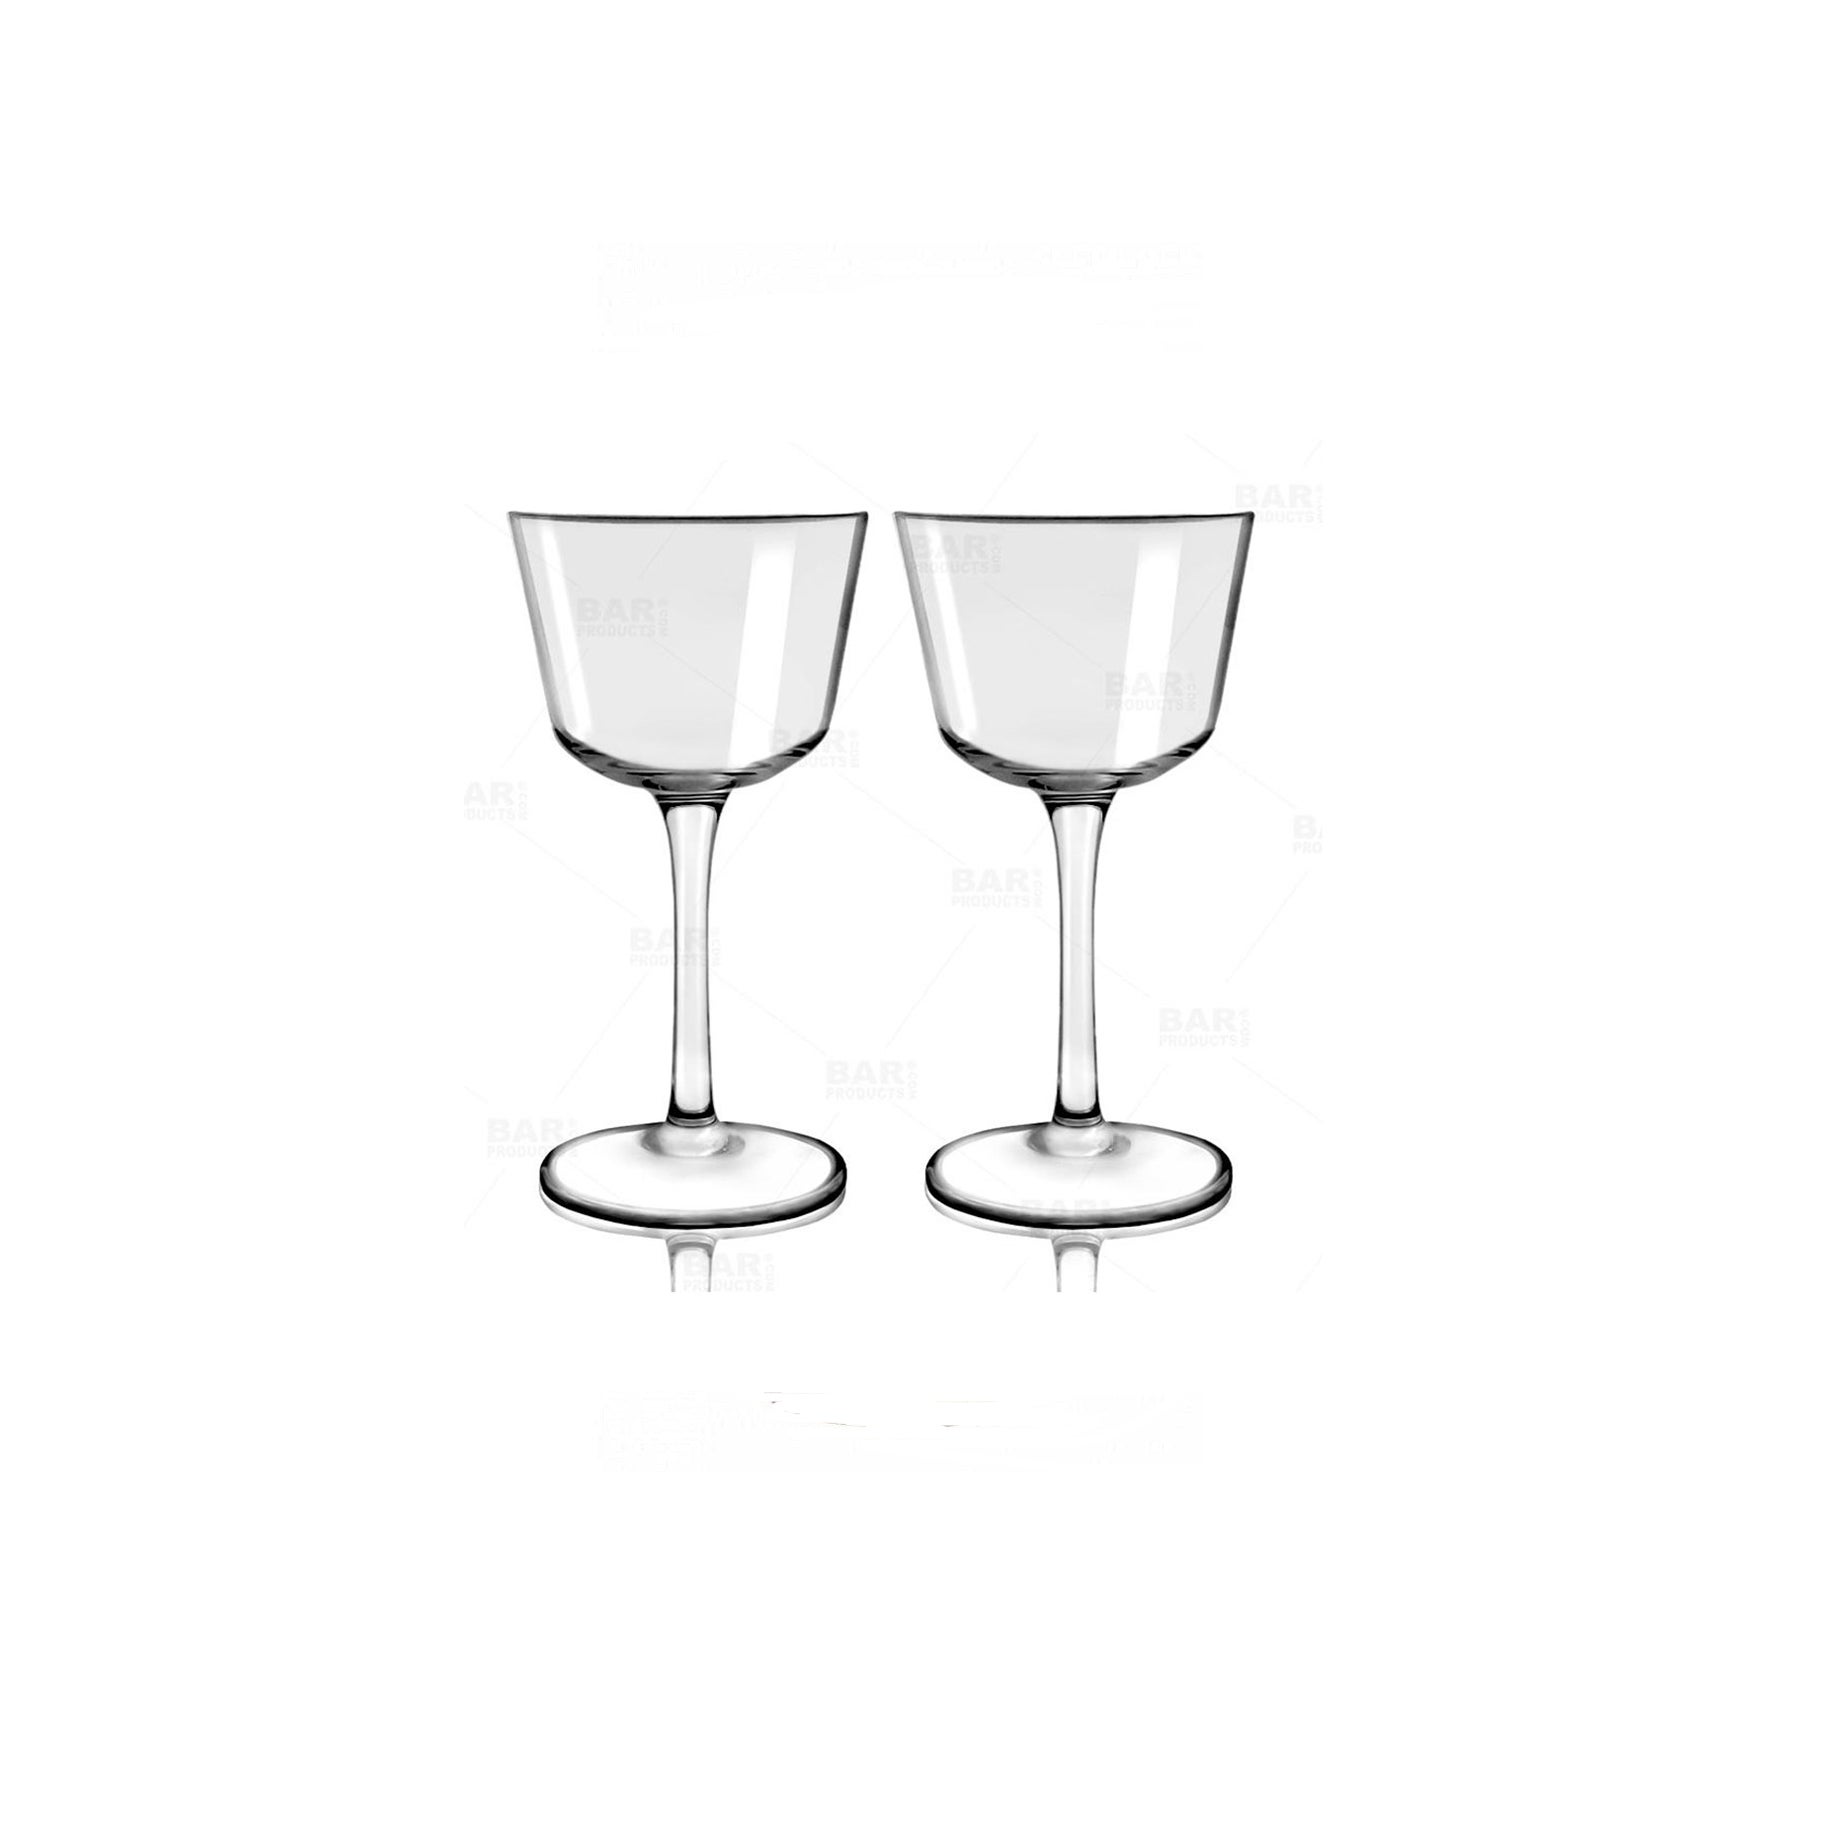 Best Martini Glasses 2021